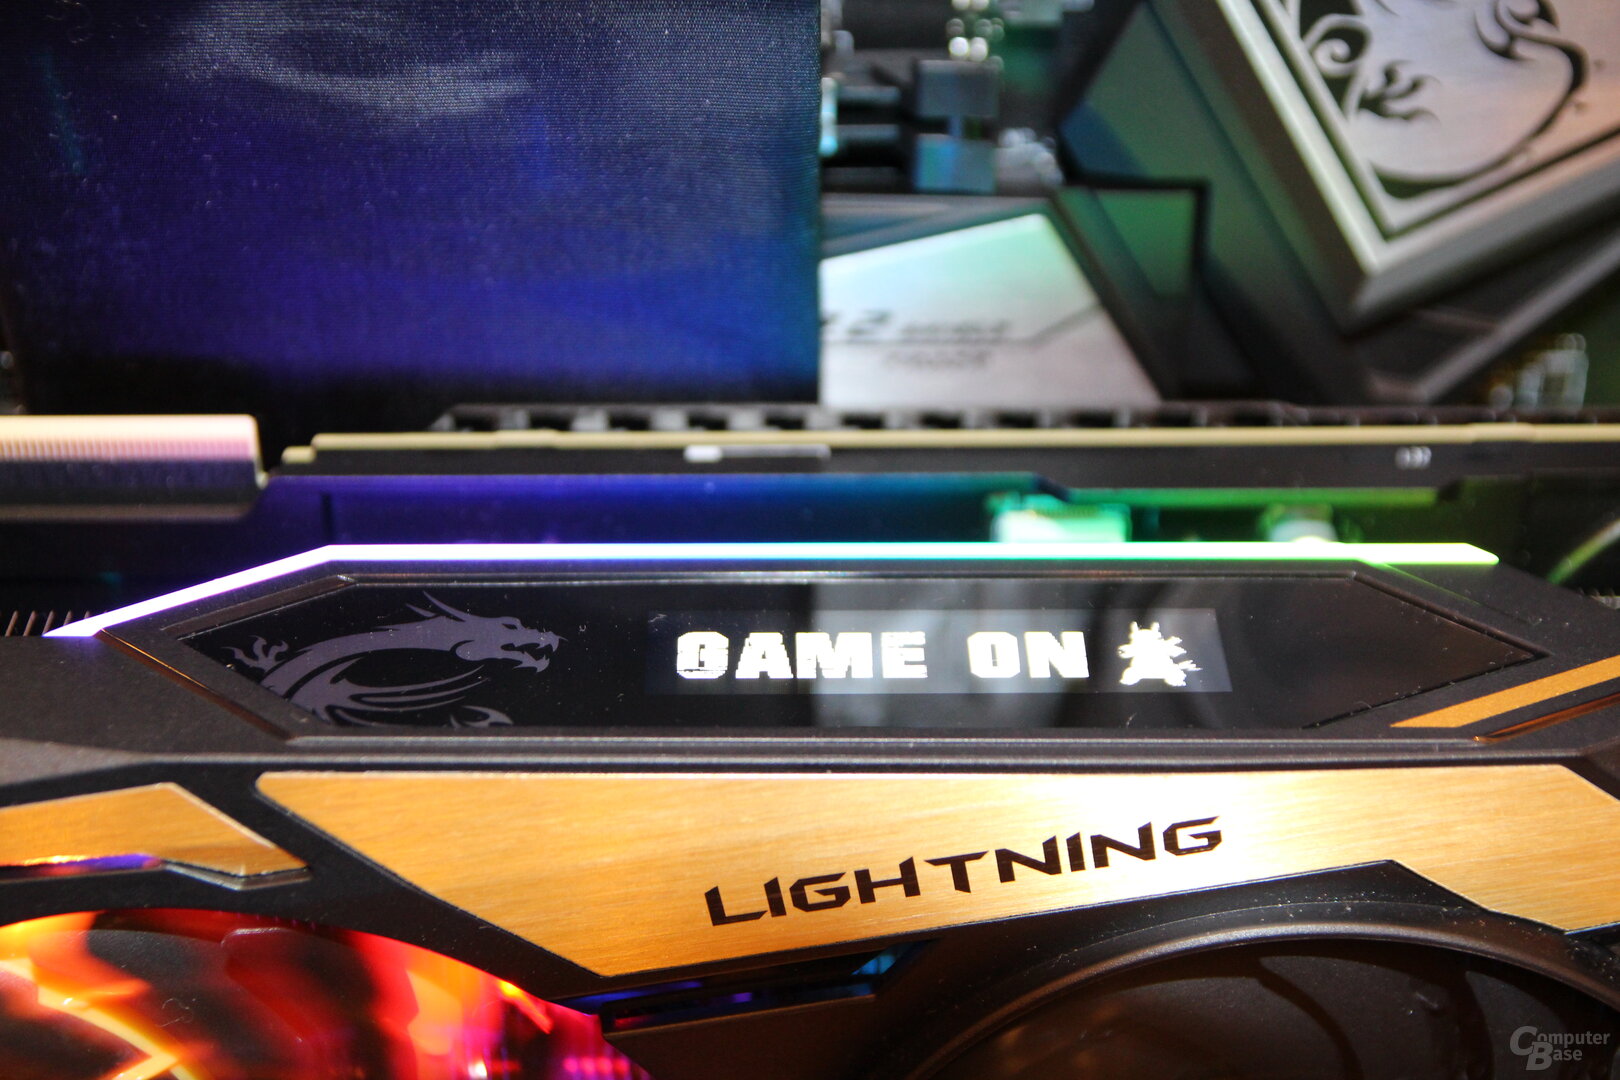 MSI GeForce RTX 2080 Ti Lightning Z